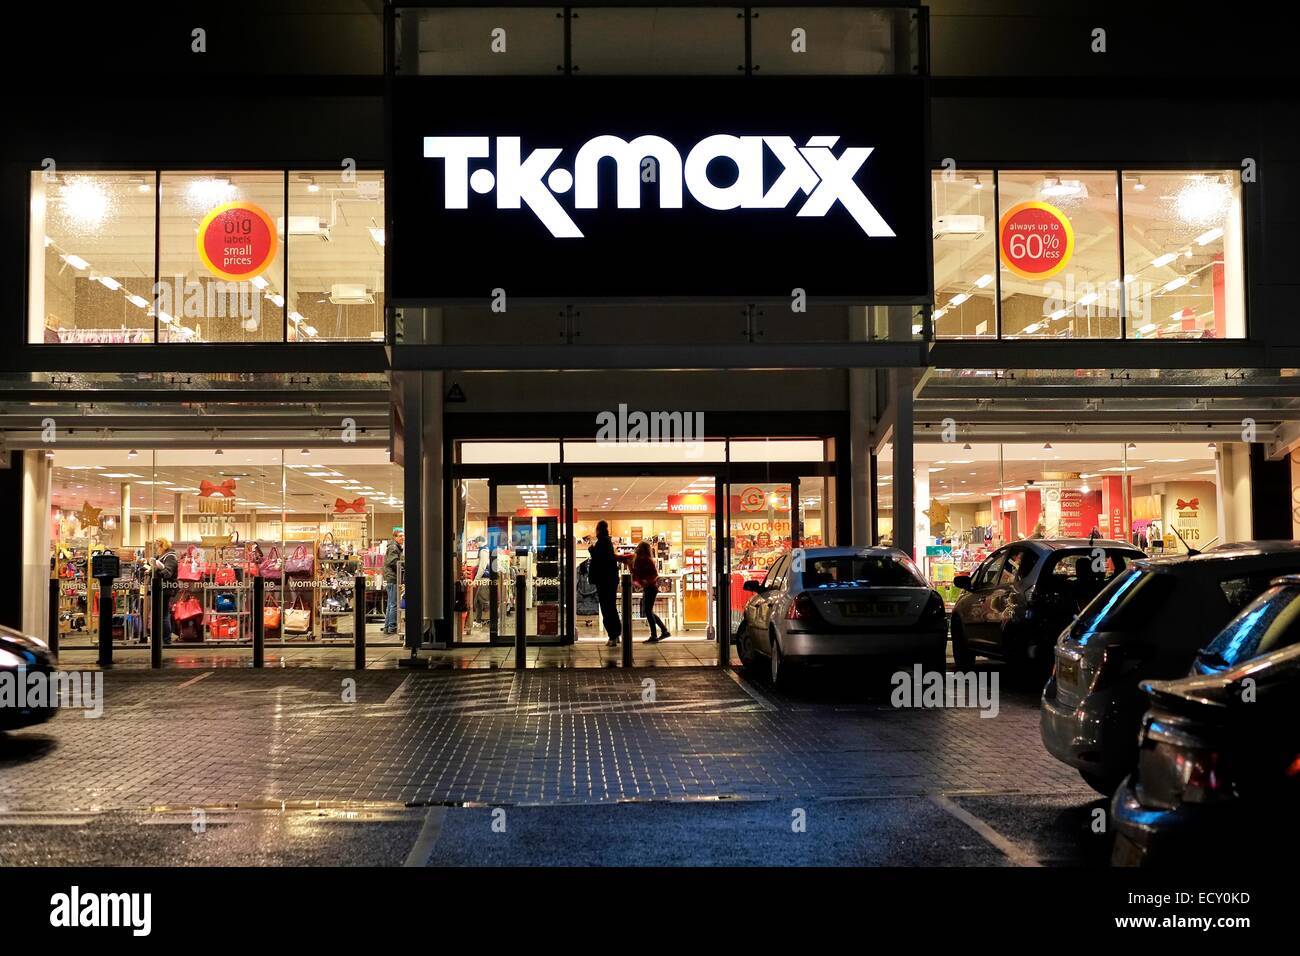 TK Maxx clothing fashion retail superstore at night england uk Stock Photo